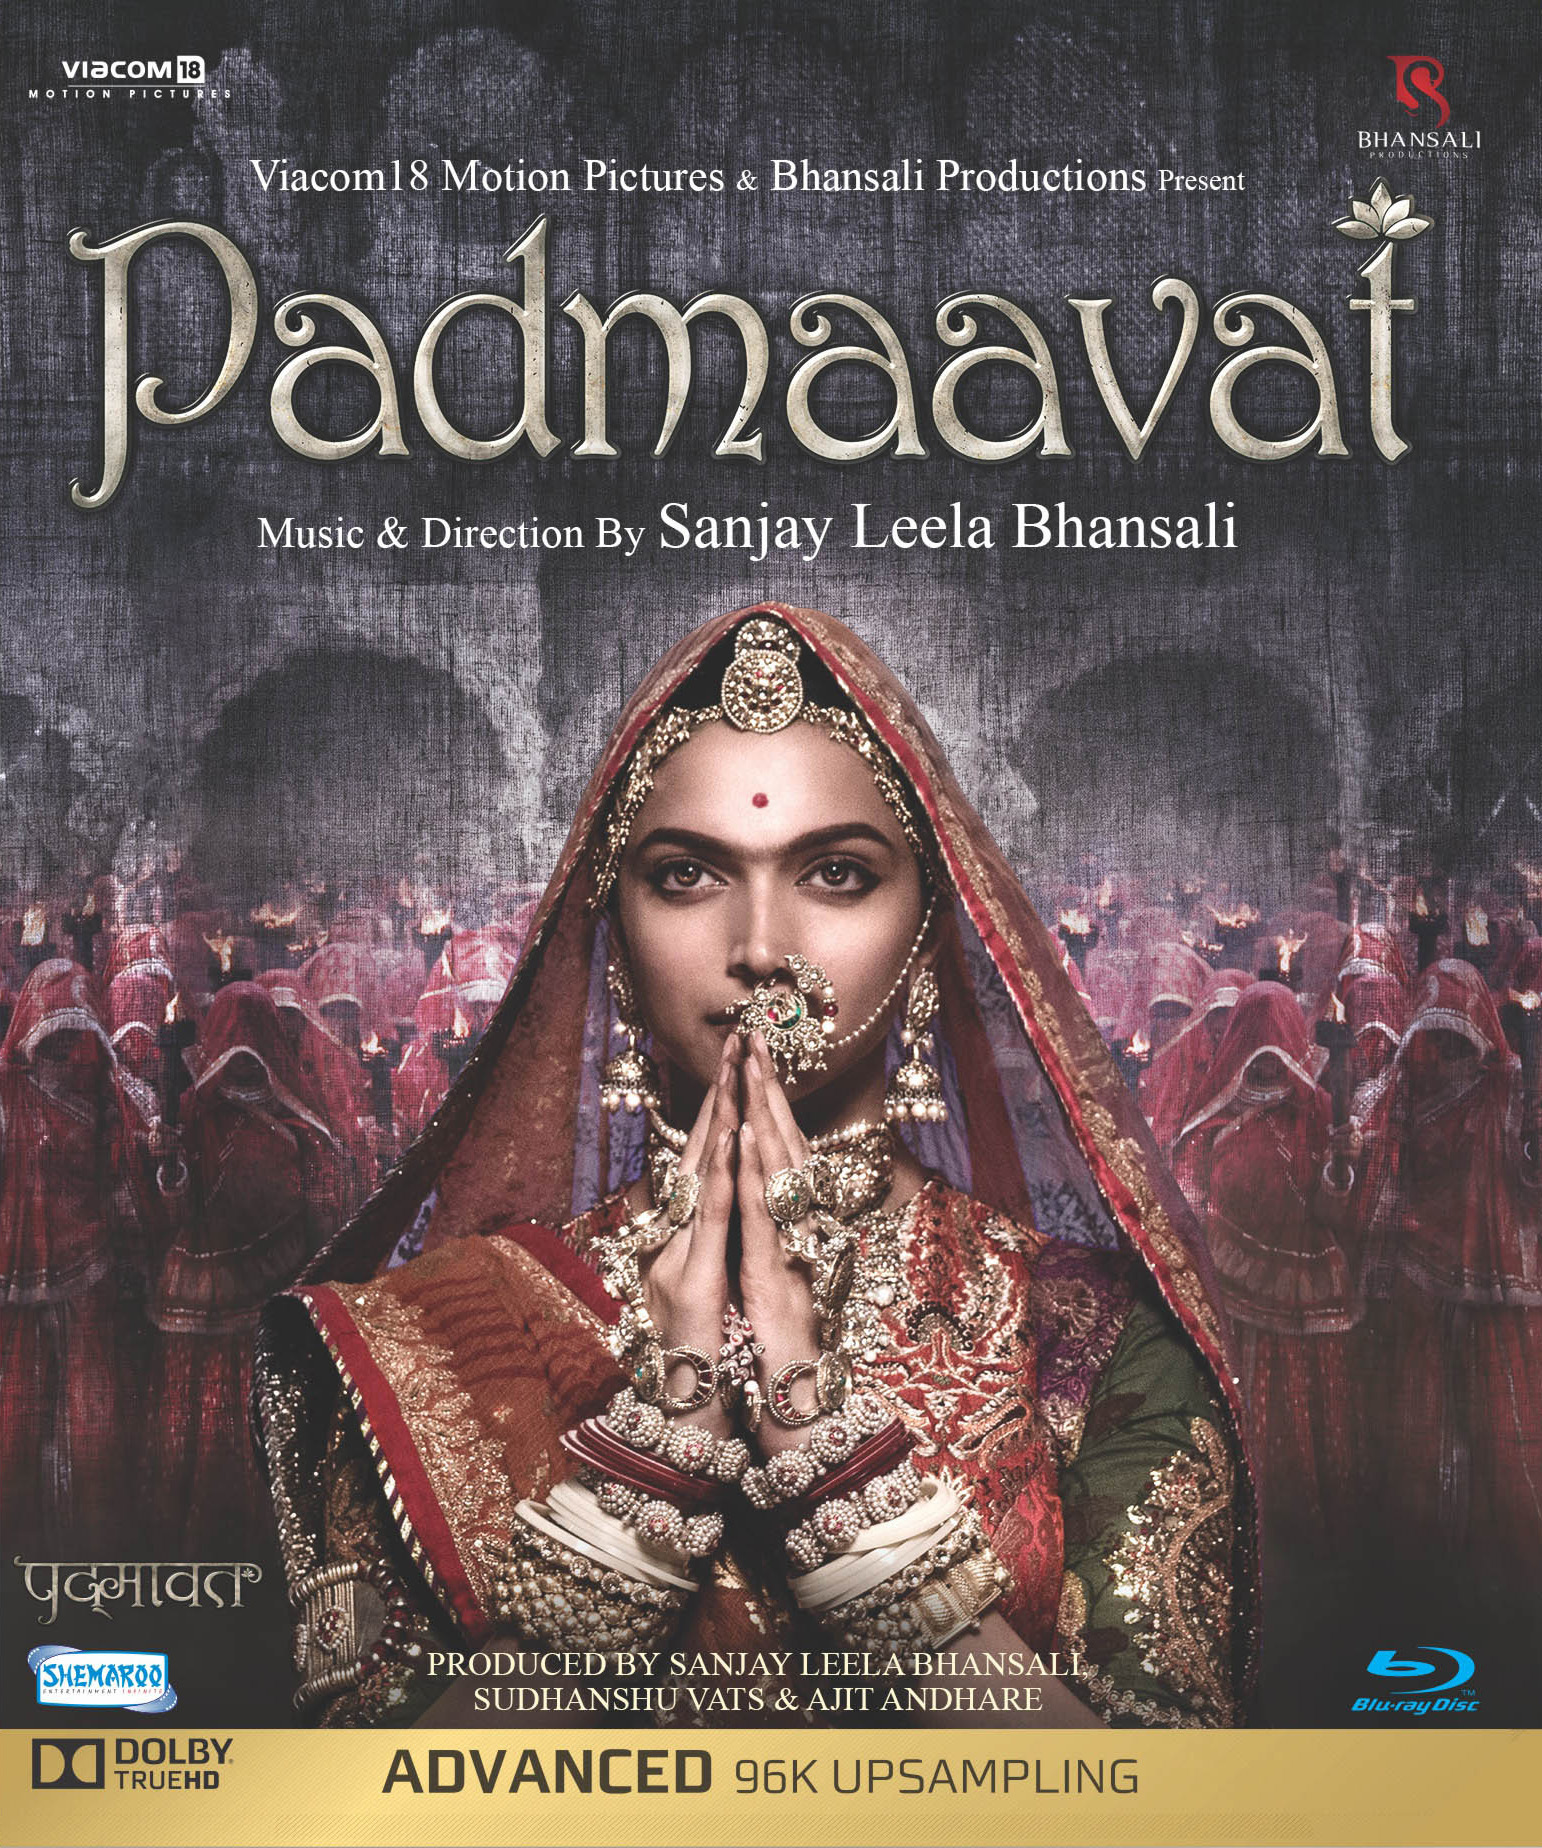 Padmaavat (2018) Hindi Full Movie | Starring Deepika Padukone, Ranveer  Singh, Shahid Kapoor - YouTube